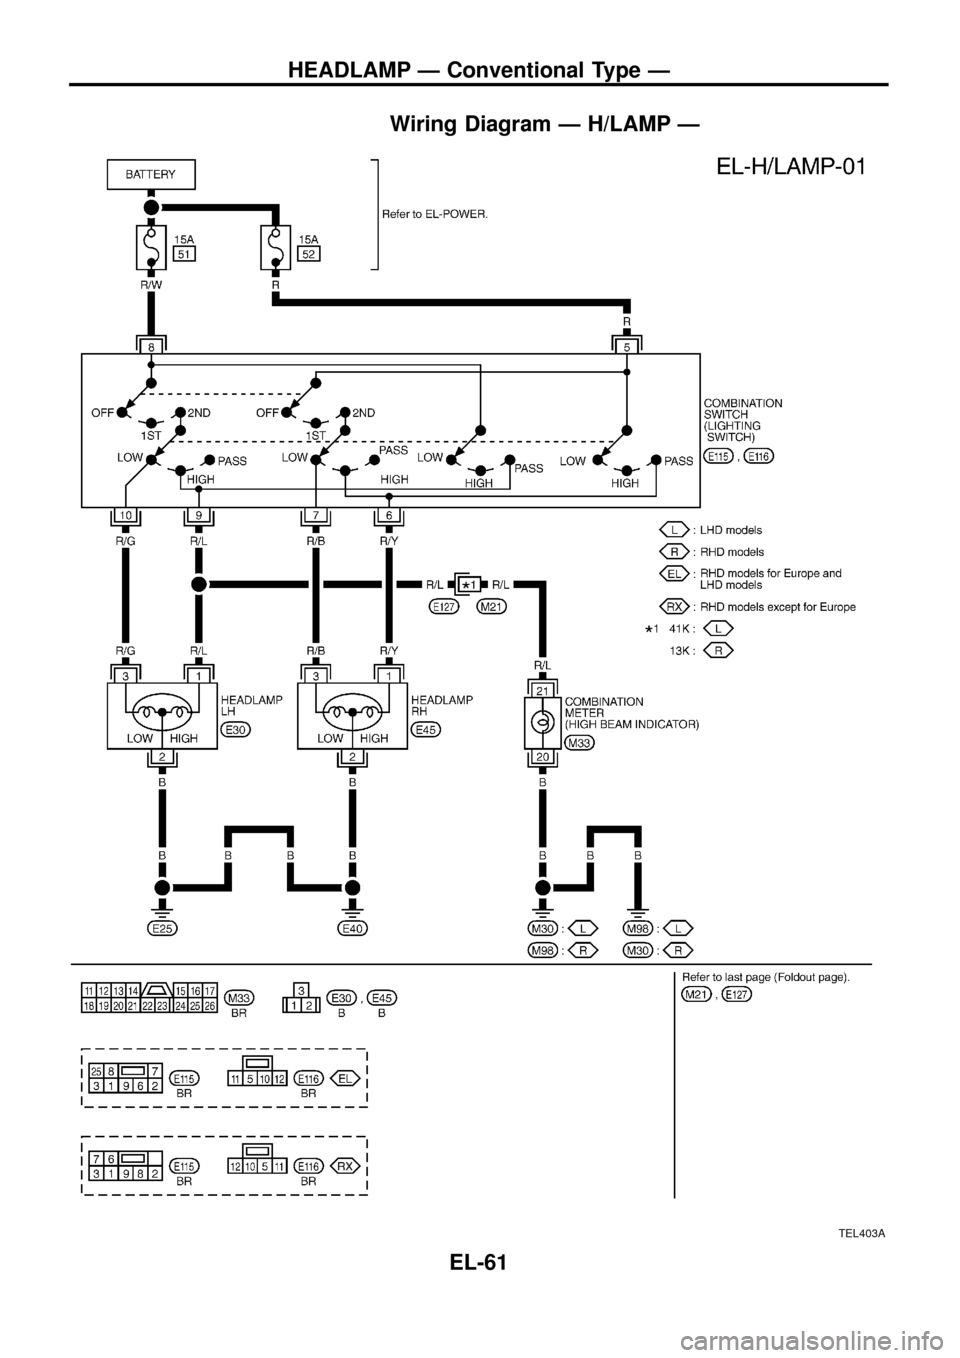 NISSAN PATROL 1998 Y61 / 5.G Electrical System User Guide Wiring Diagram Ð H/LAMP Ð
TEL403A
HEADLAMP Ð Conventional Type Ð
EL-61 